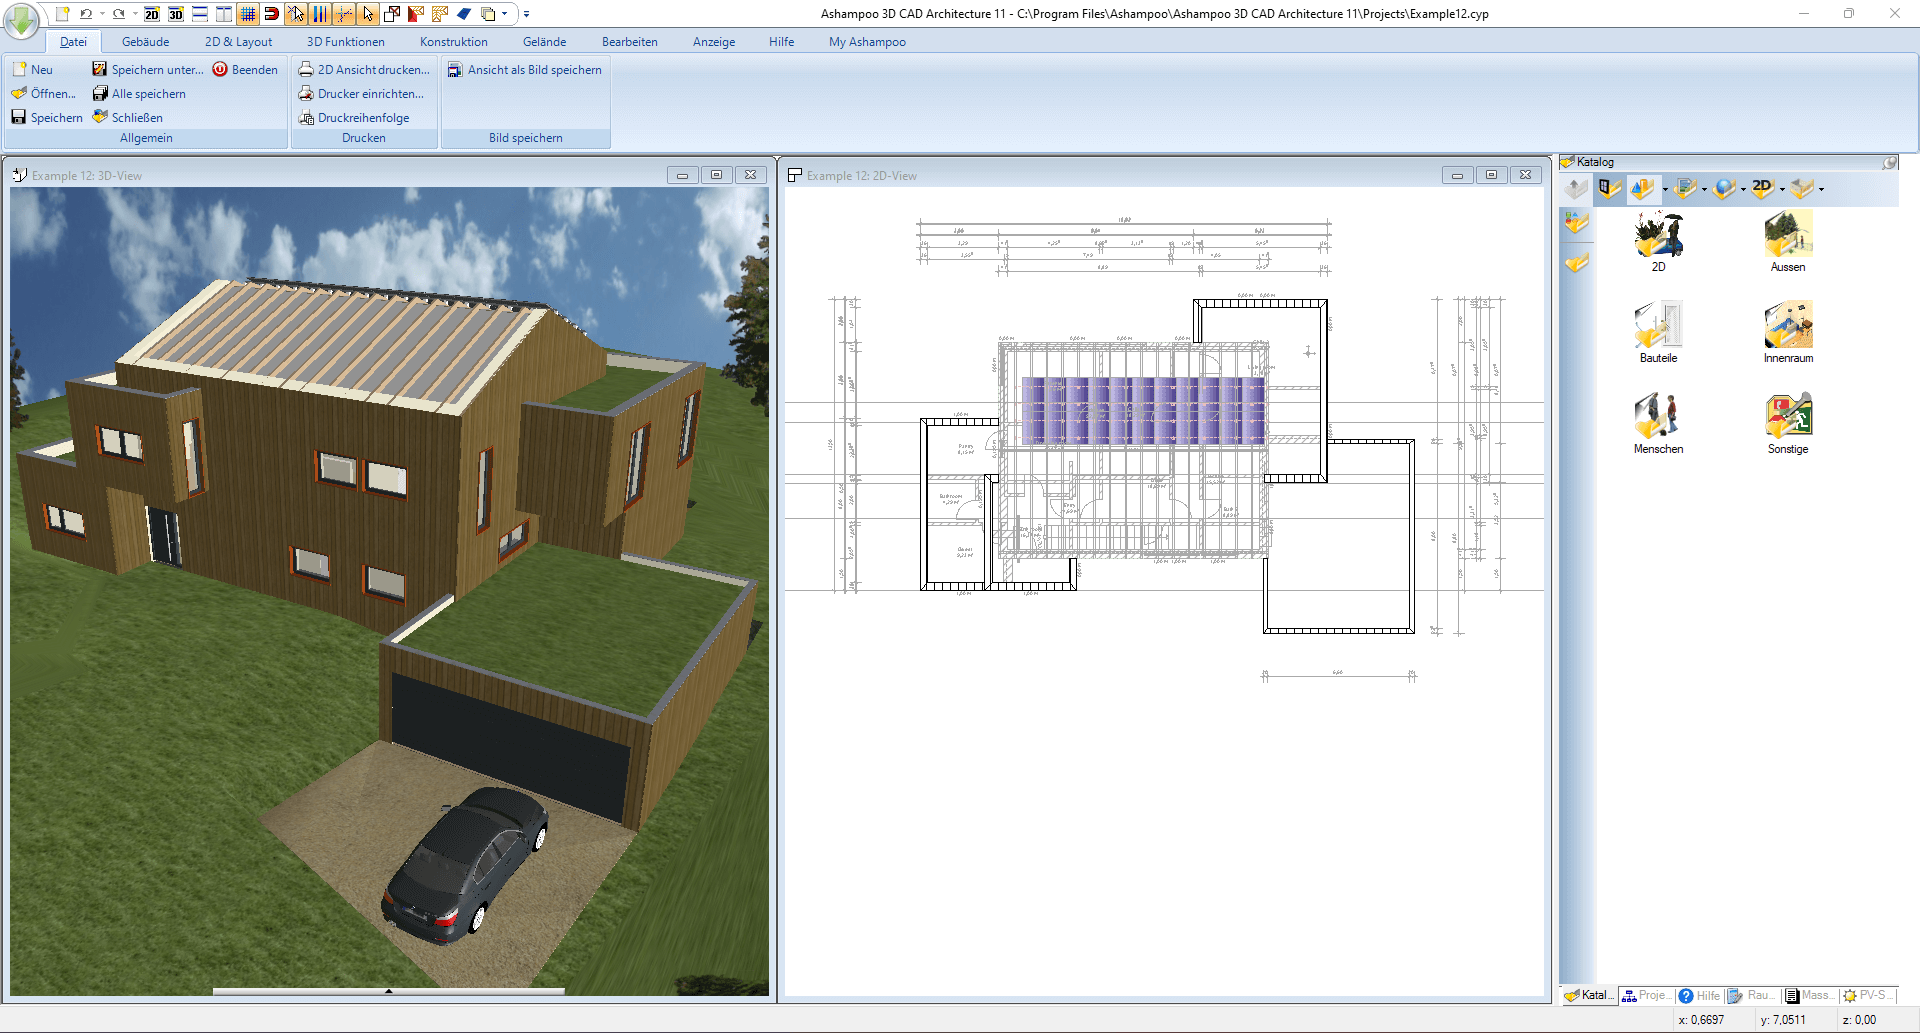 Ashampoo 3D CAD Architecture 11 - Holzhaus 